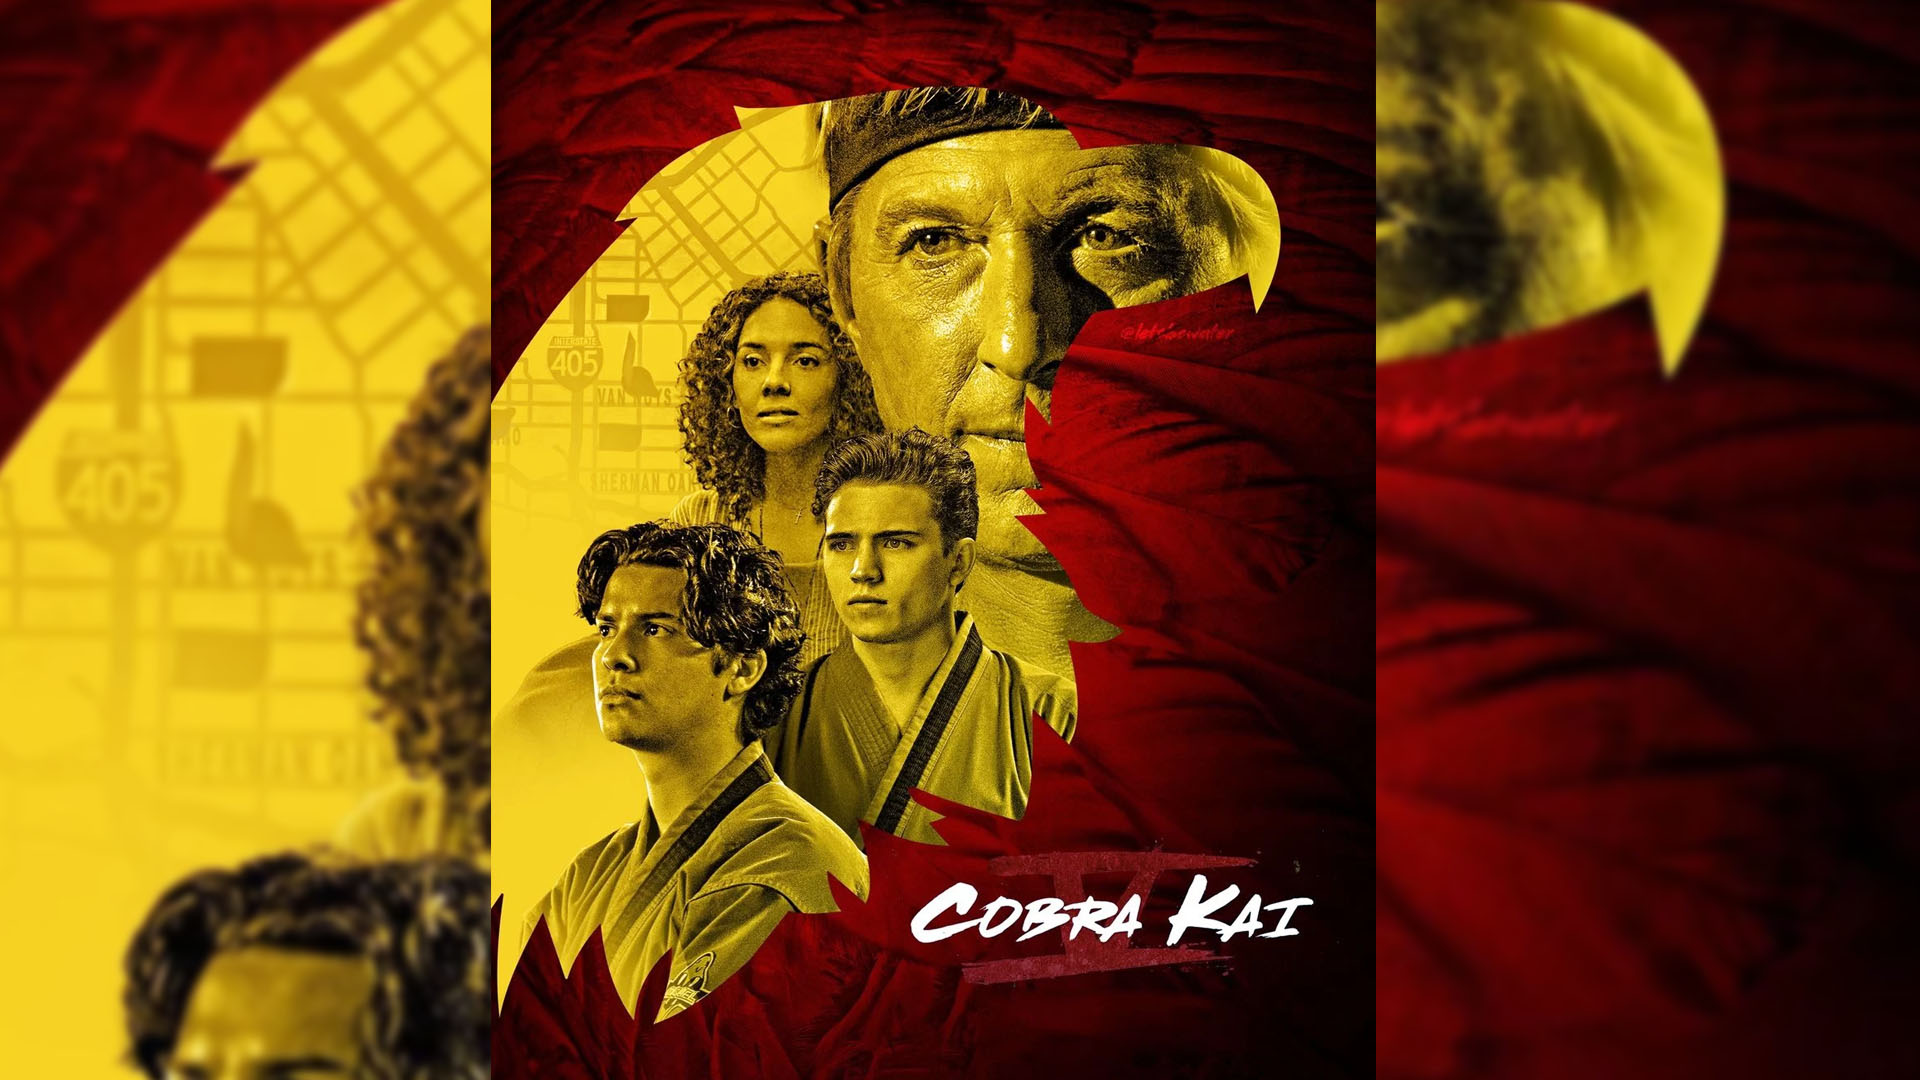 Cobra Kai season 5 release date cast synopsis trailer photos